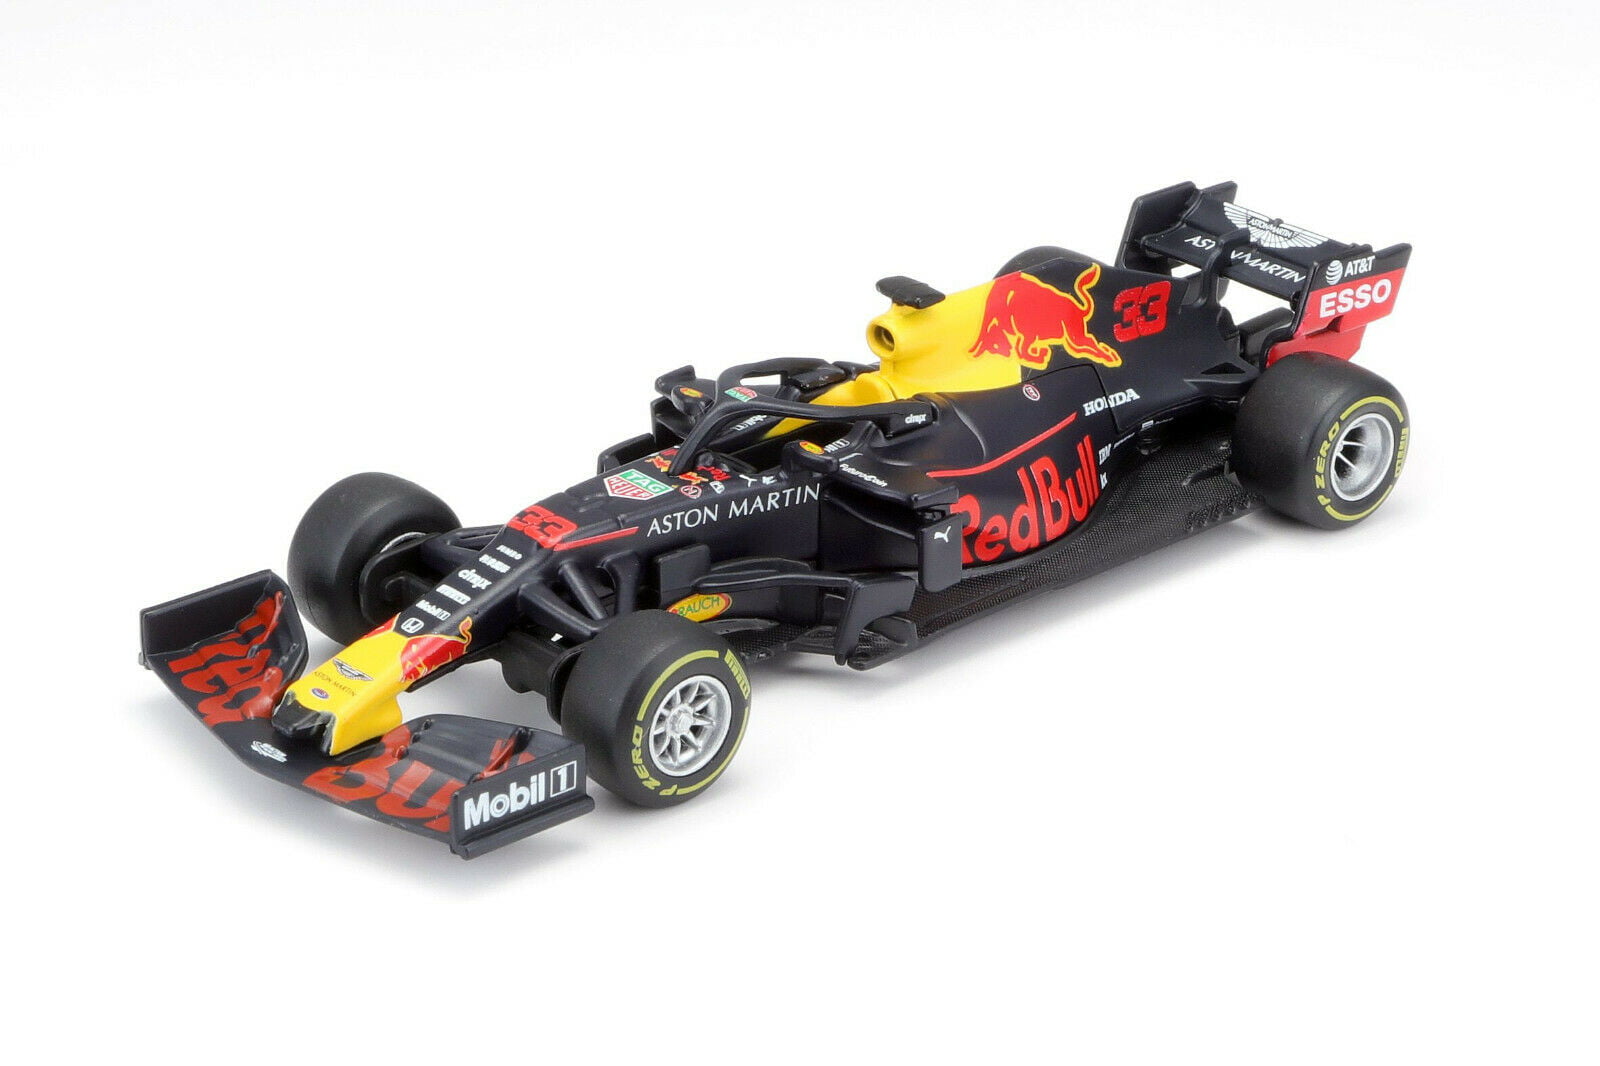 kristal Sturen ondernemer Aston Martin RB15 #33 Max Verstappen Formula One F1 Red Bull Racing (2019)  1/43 Diecast Model Car by Bburago - Walmart.com